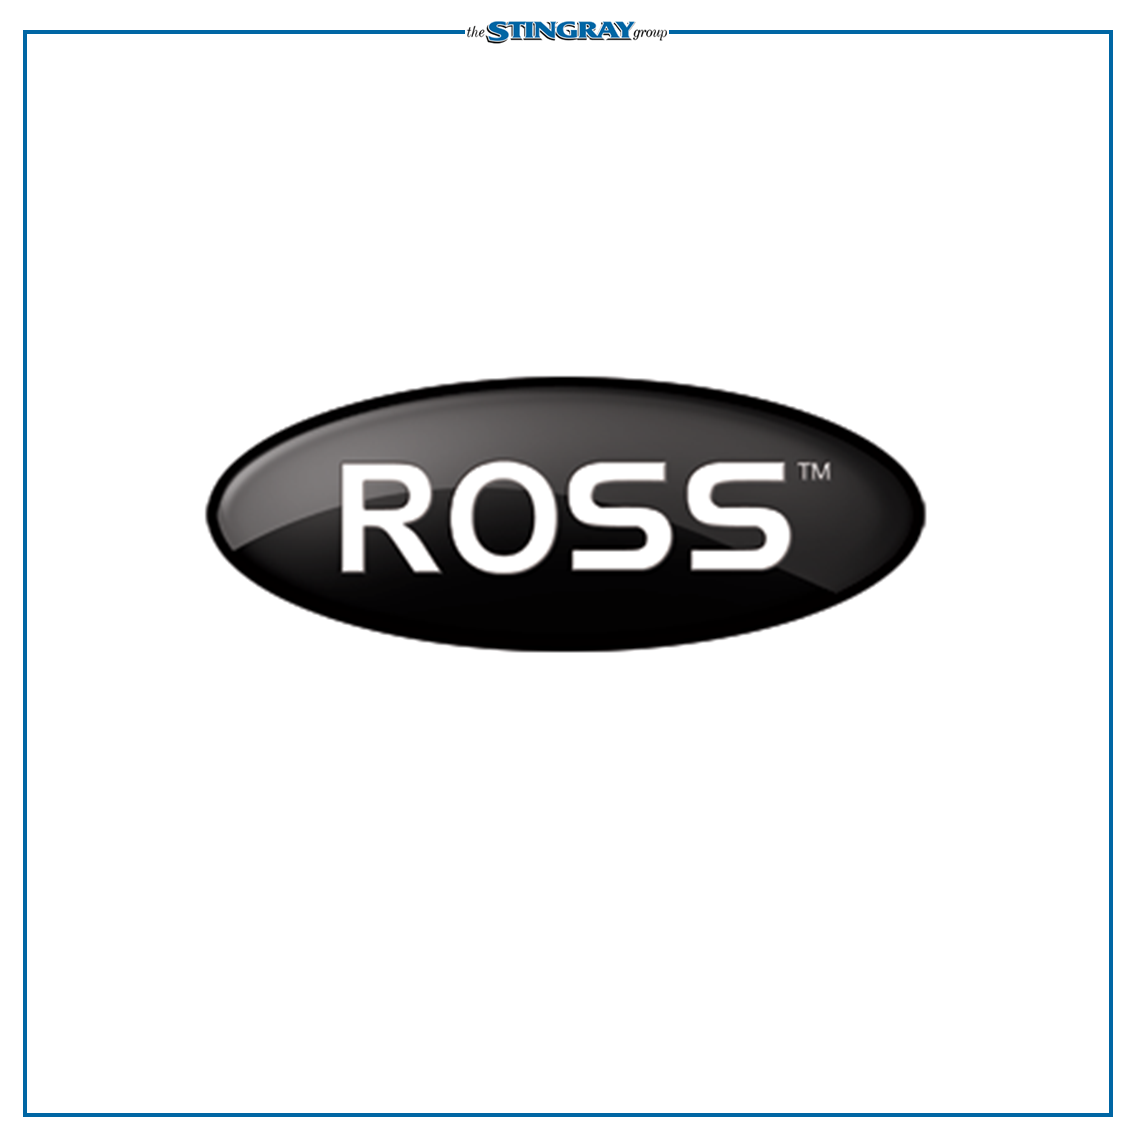 STINGRAY - Ross Catalogue